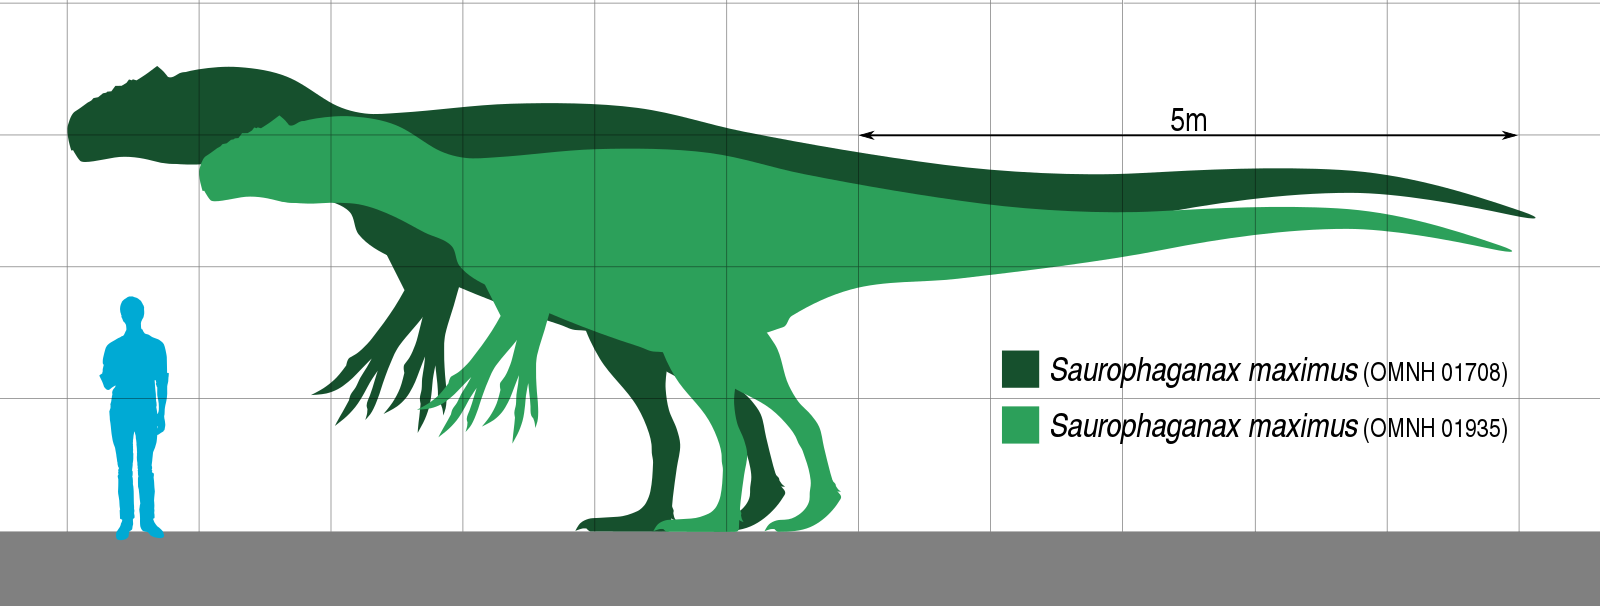 Заурофаганакс. Saurophaganax Maximus. Аллозавр сравнение размеров. Торвозавр против Заурофаганакс.